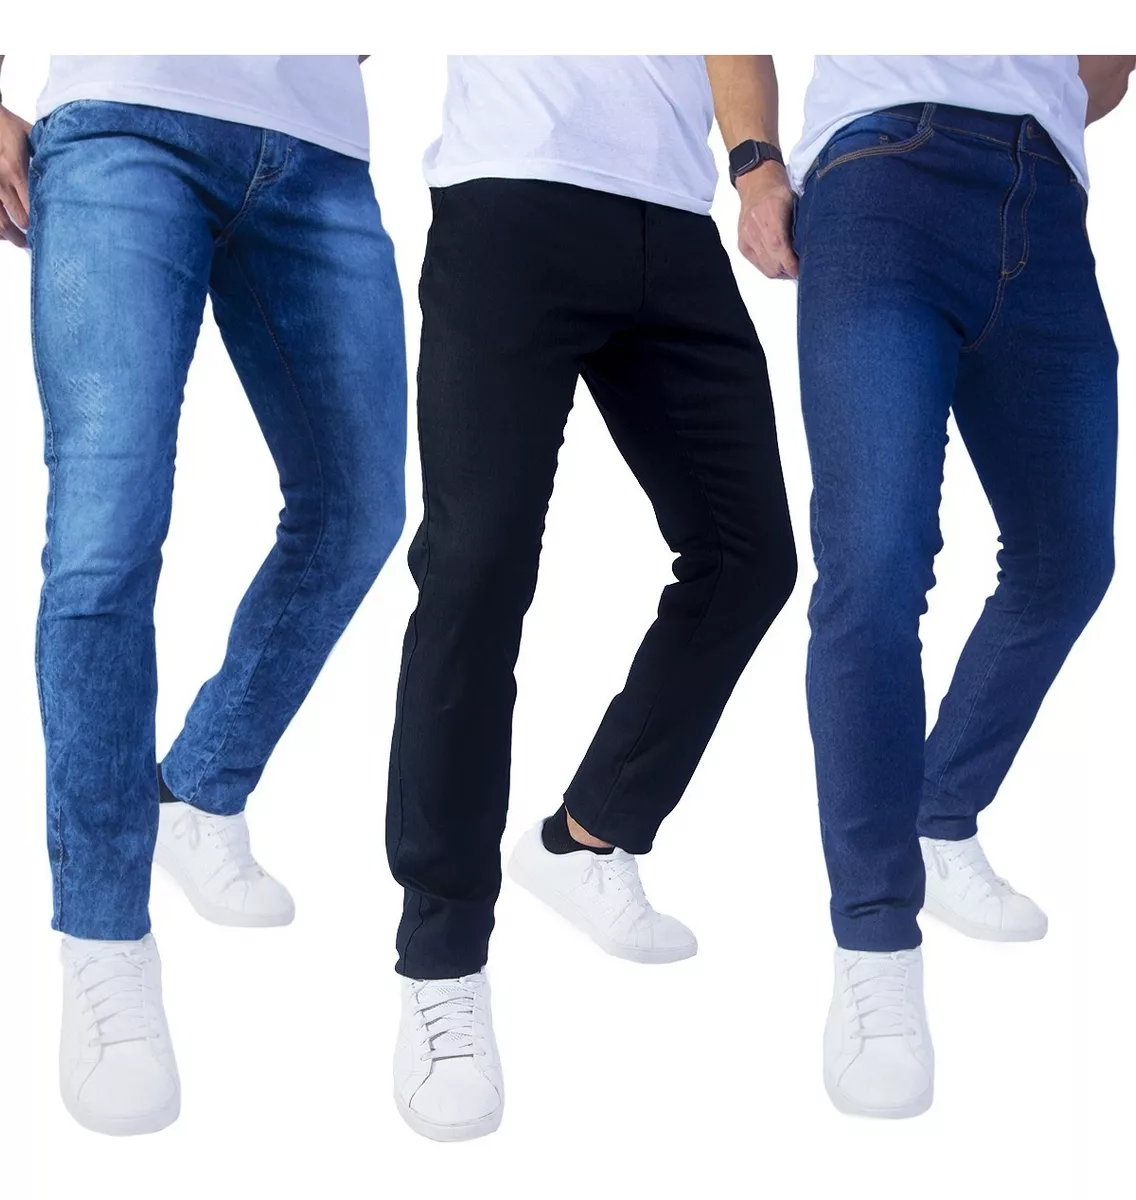 Kit 3 Calça Jeans Masculina Slim Original Elastano Lycra 